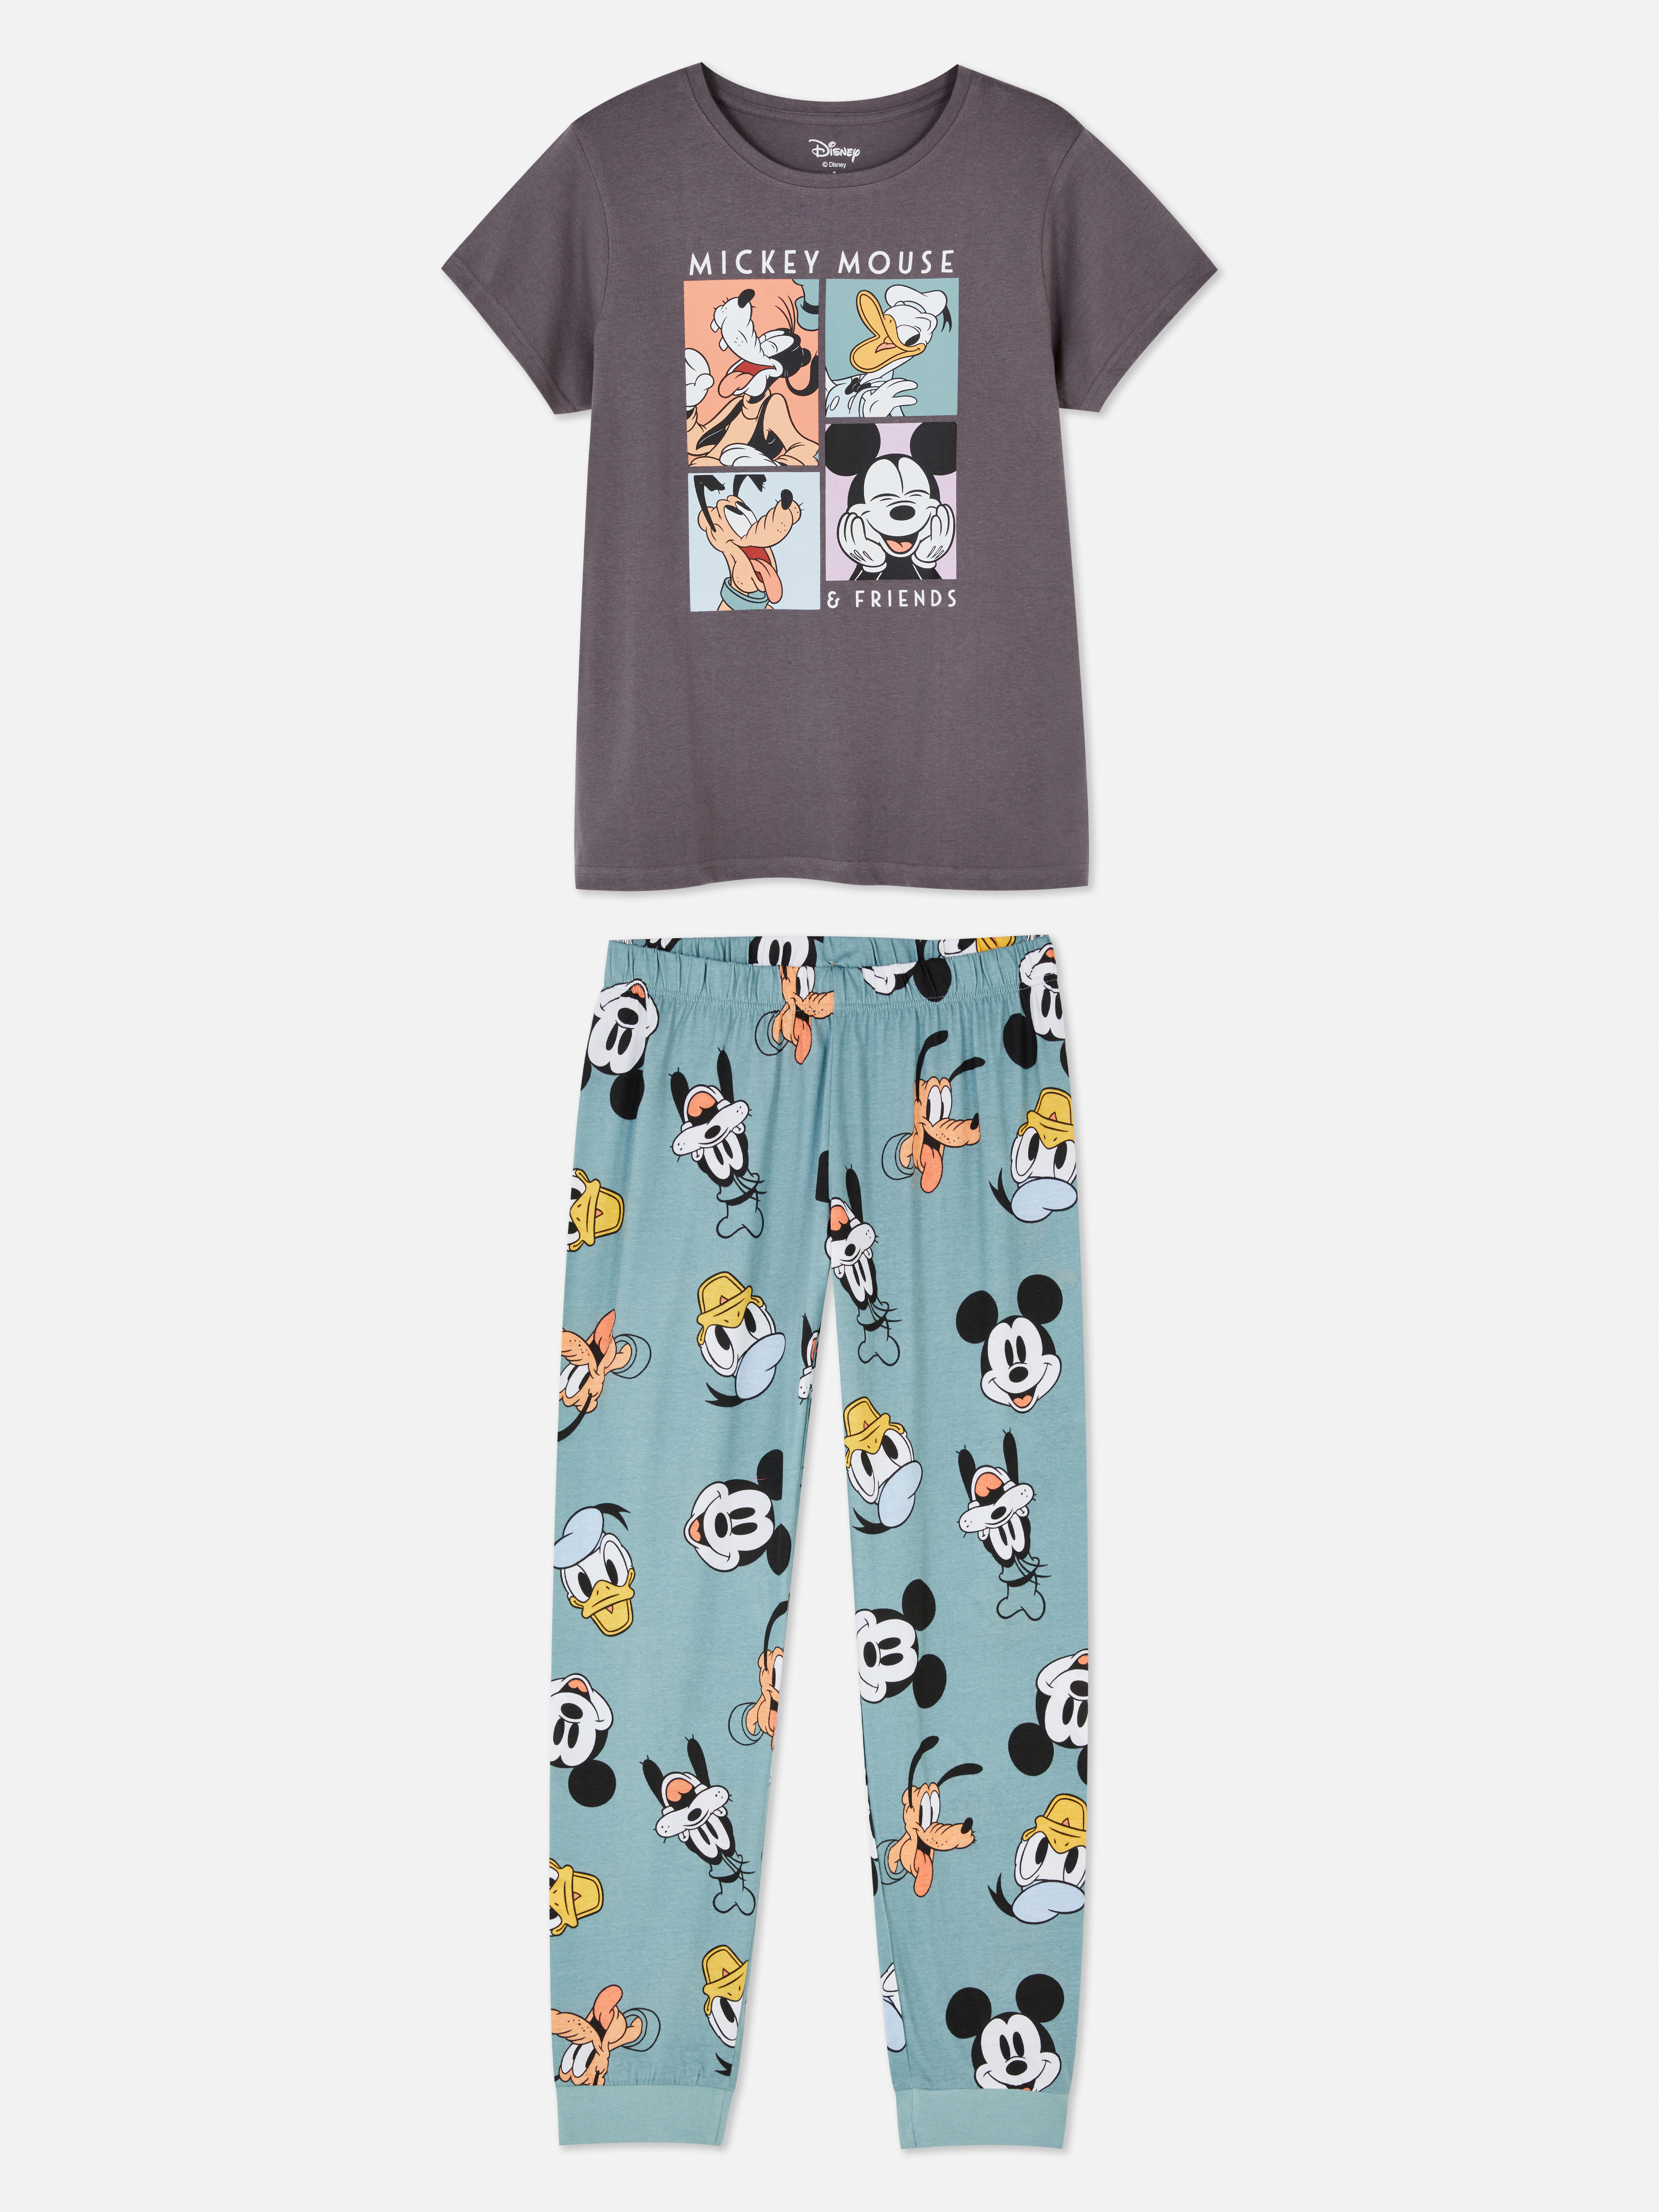 Disney's Mickey Mouse & Friends Short Sleeve Pyjama Set